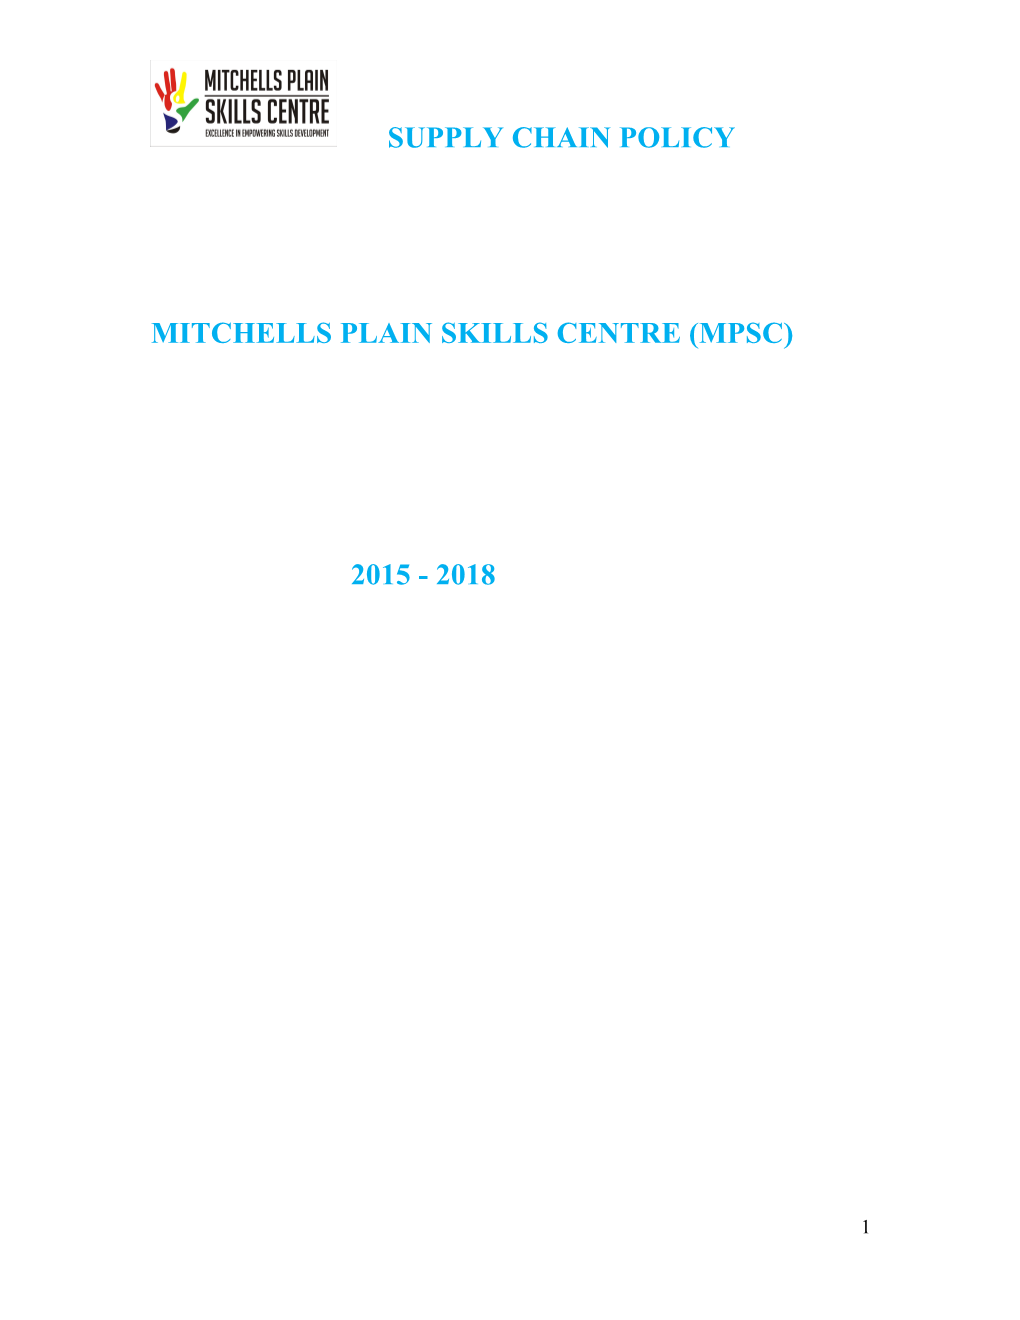 Mitchells Plain Skills Centre (Mpsc)